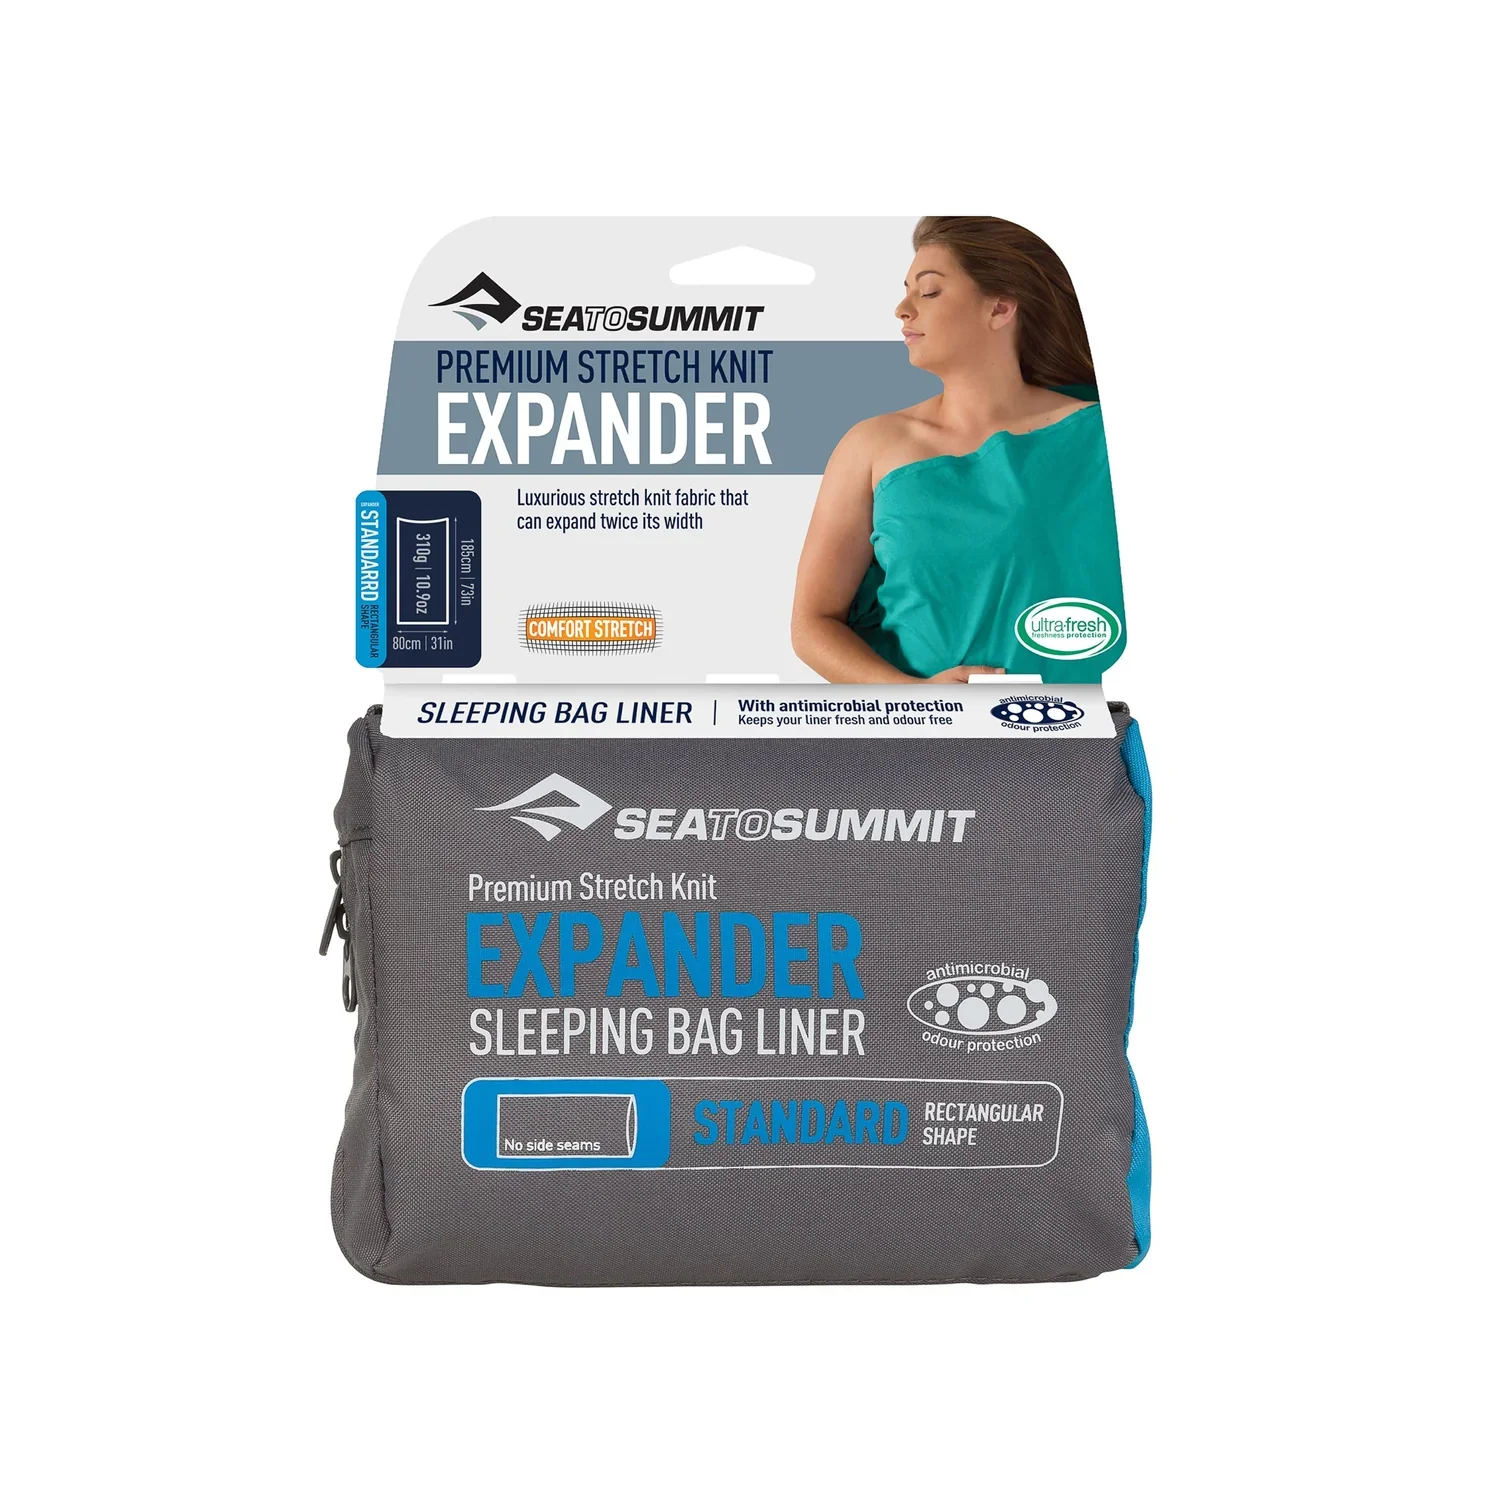 Sleeping-Bag-Liner-Premium-stretch-knit-expander_96fc6ce3-3b0b-474c-9813-849909da4b20